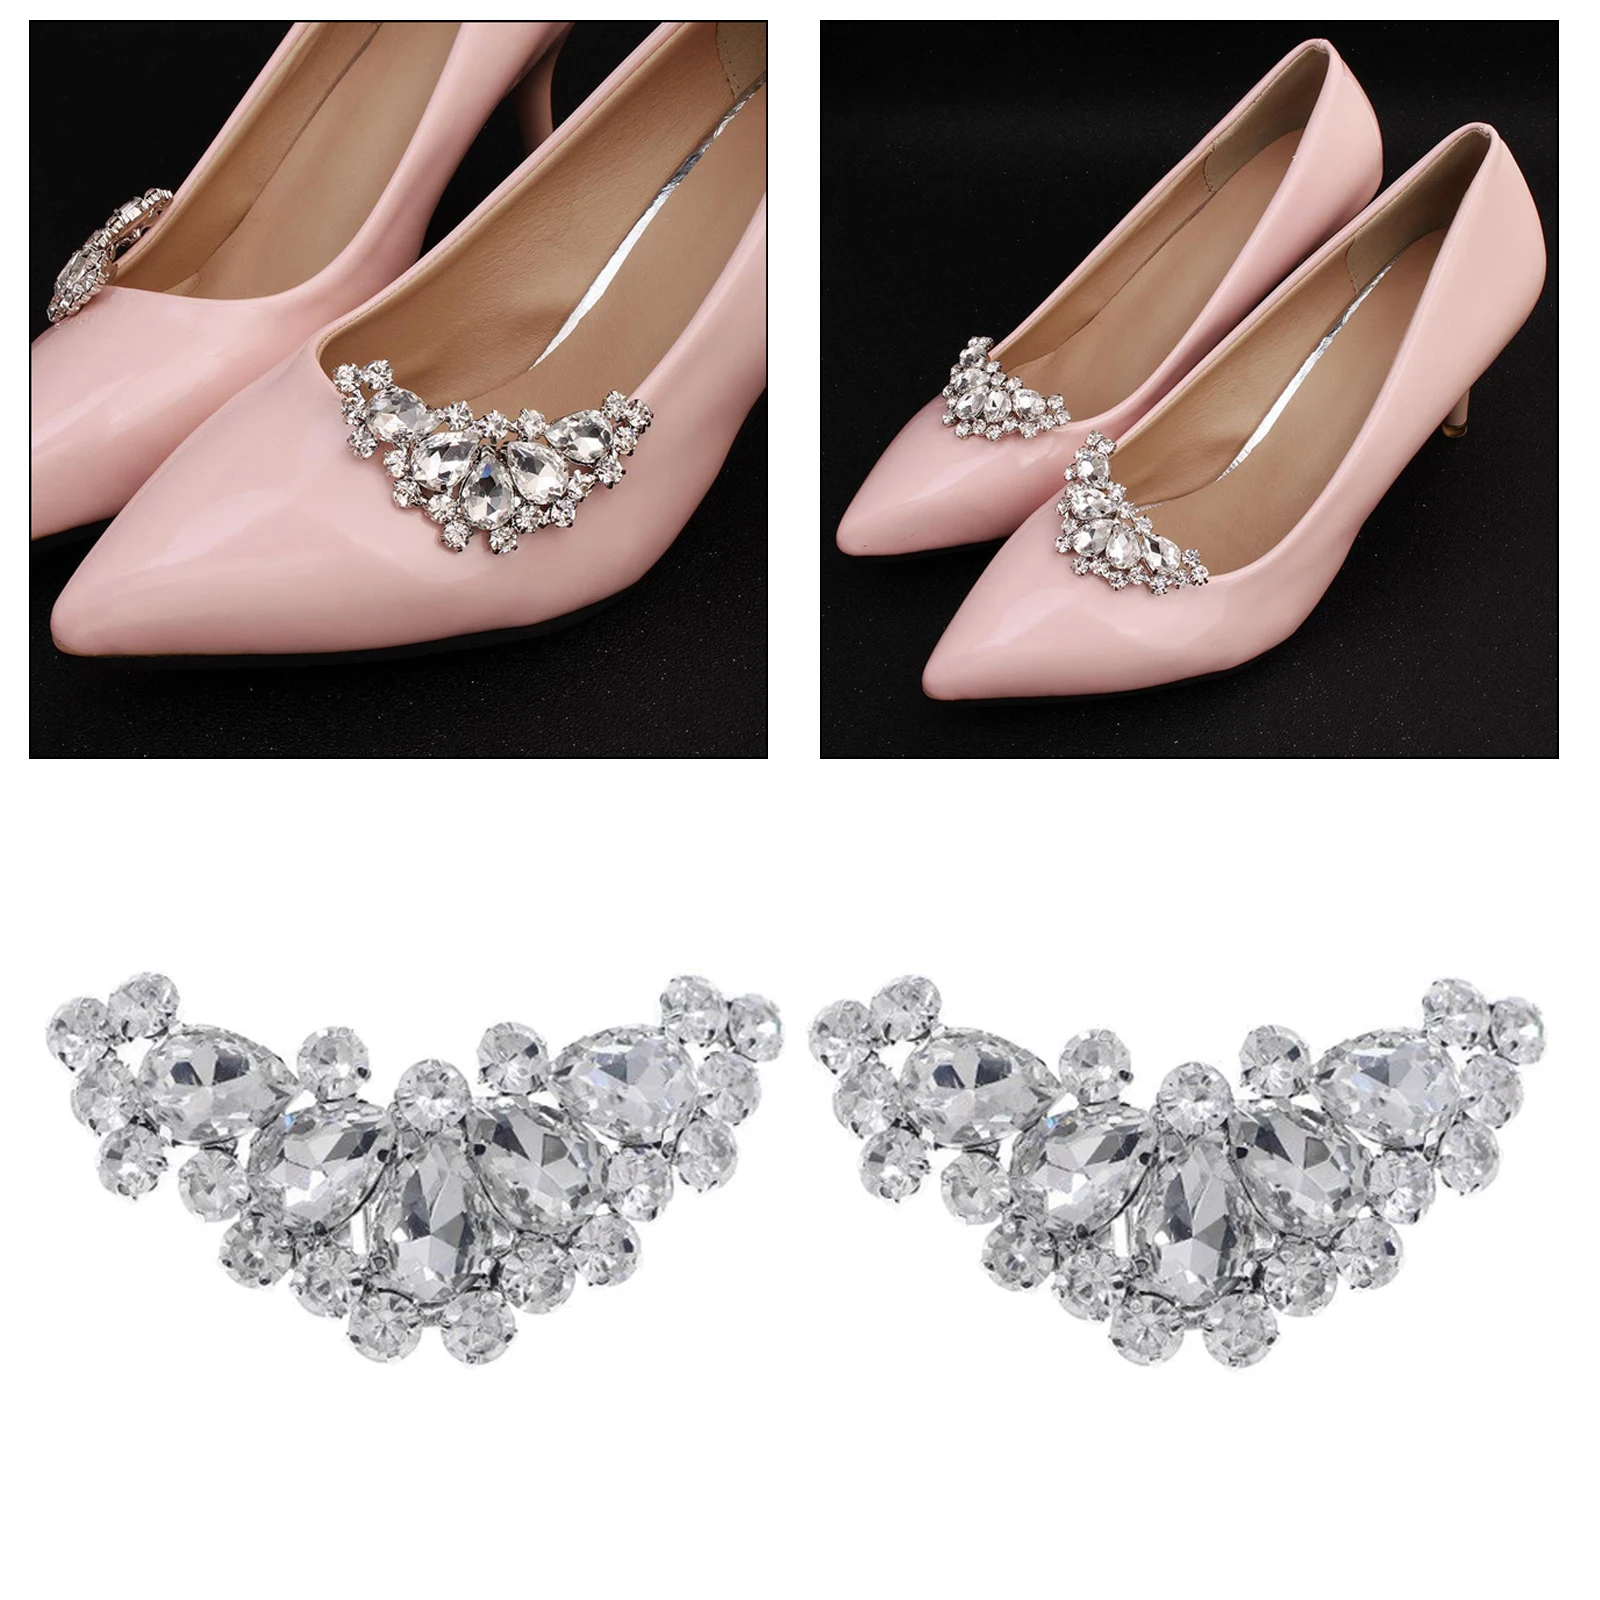 2pcs Women Rhinestones Decorative Shoes Clips Jewelry Charm Decor Accessories